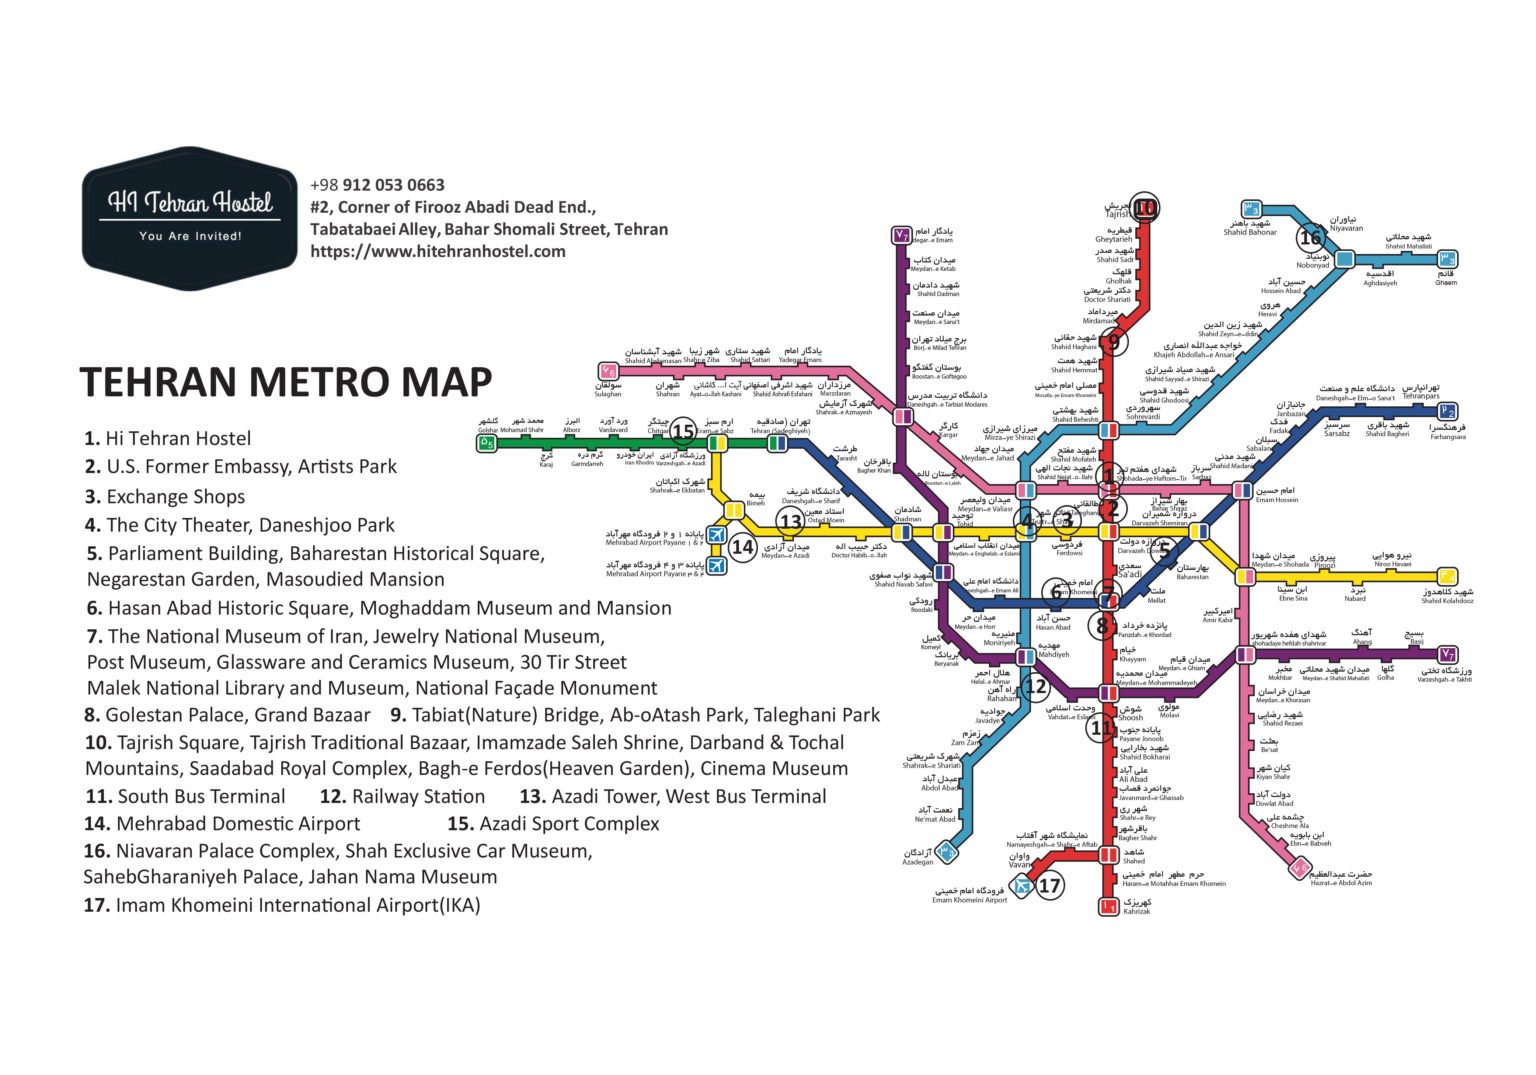 Tehran Metro Map 2019 Copy 1536x1075 